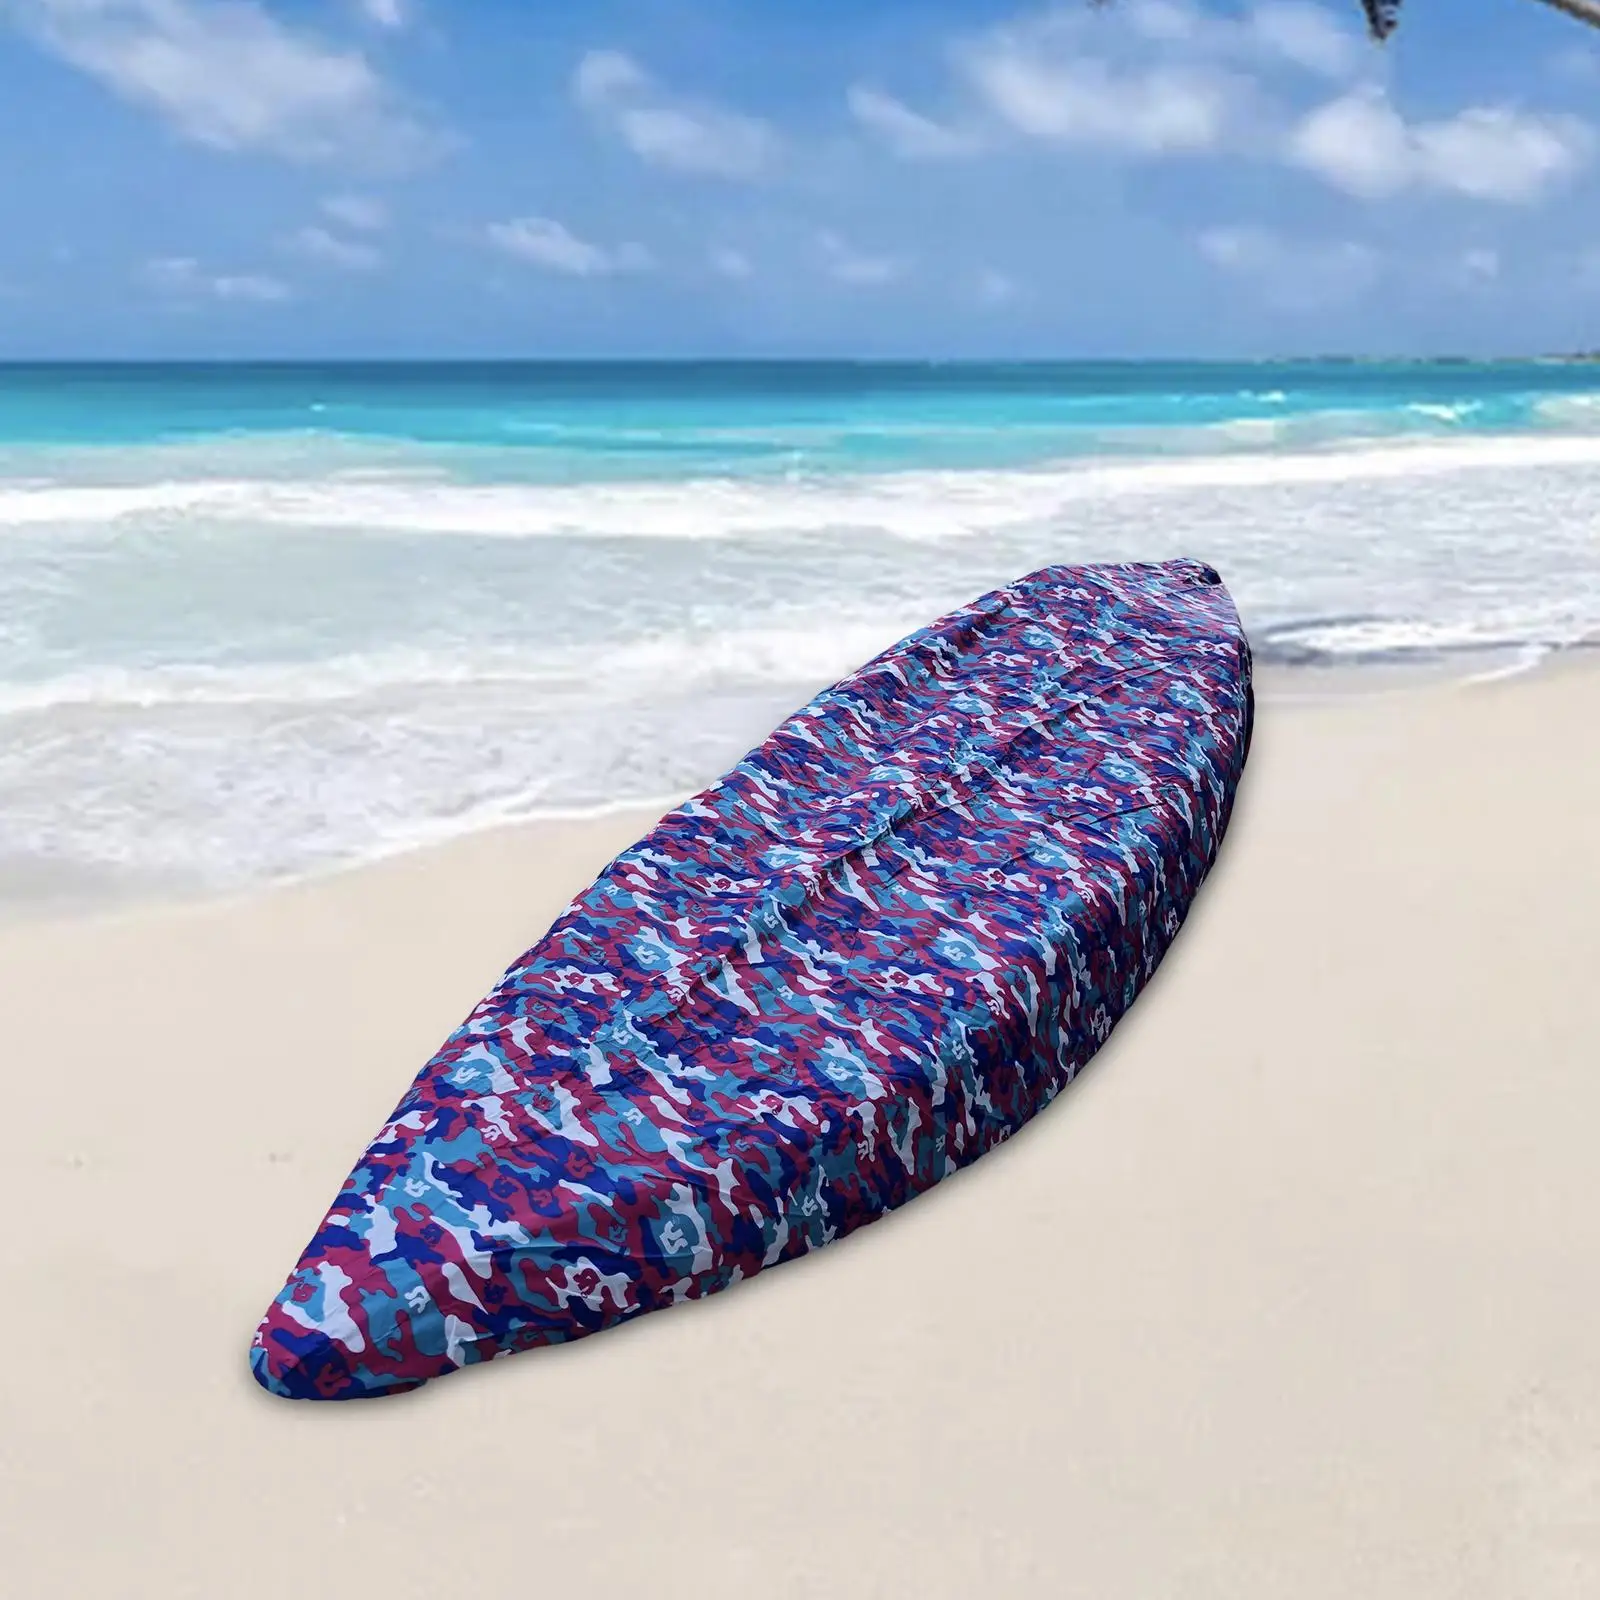 Professional Kayak Cover Portable Protector Sun for Backyard Fishing Boat